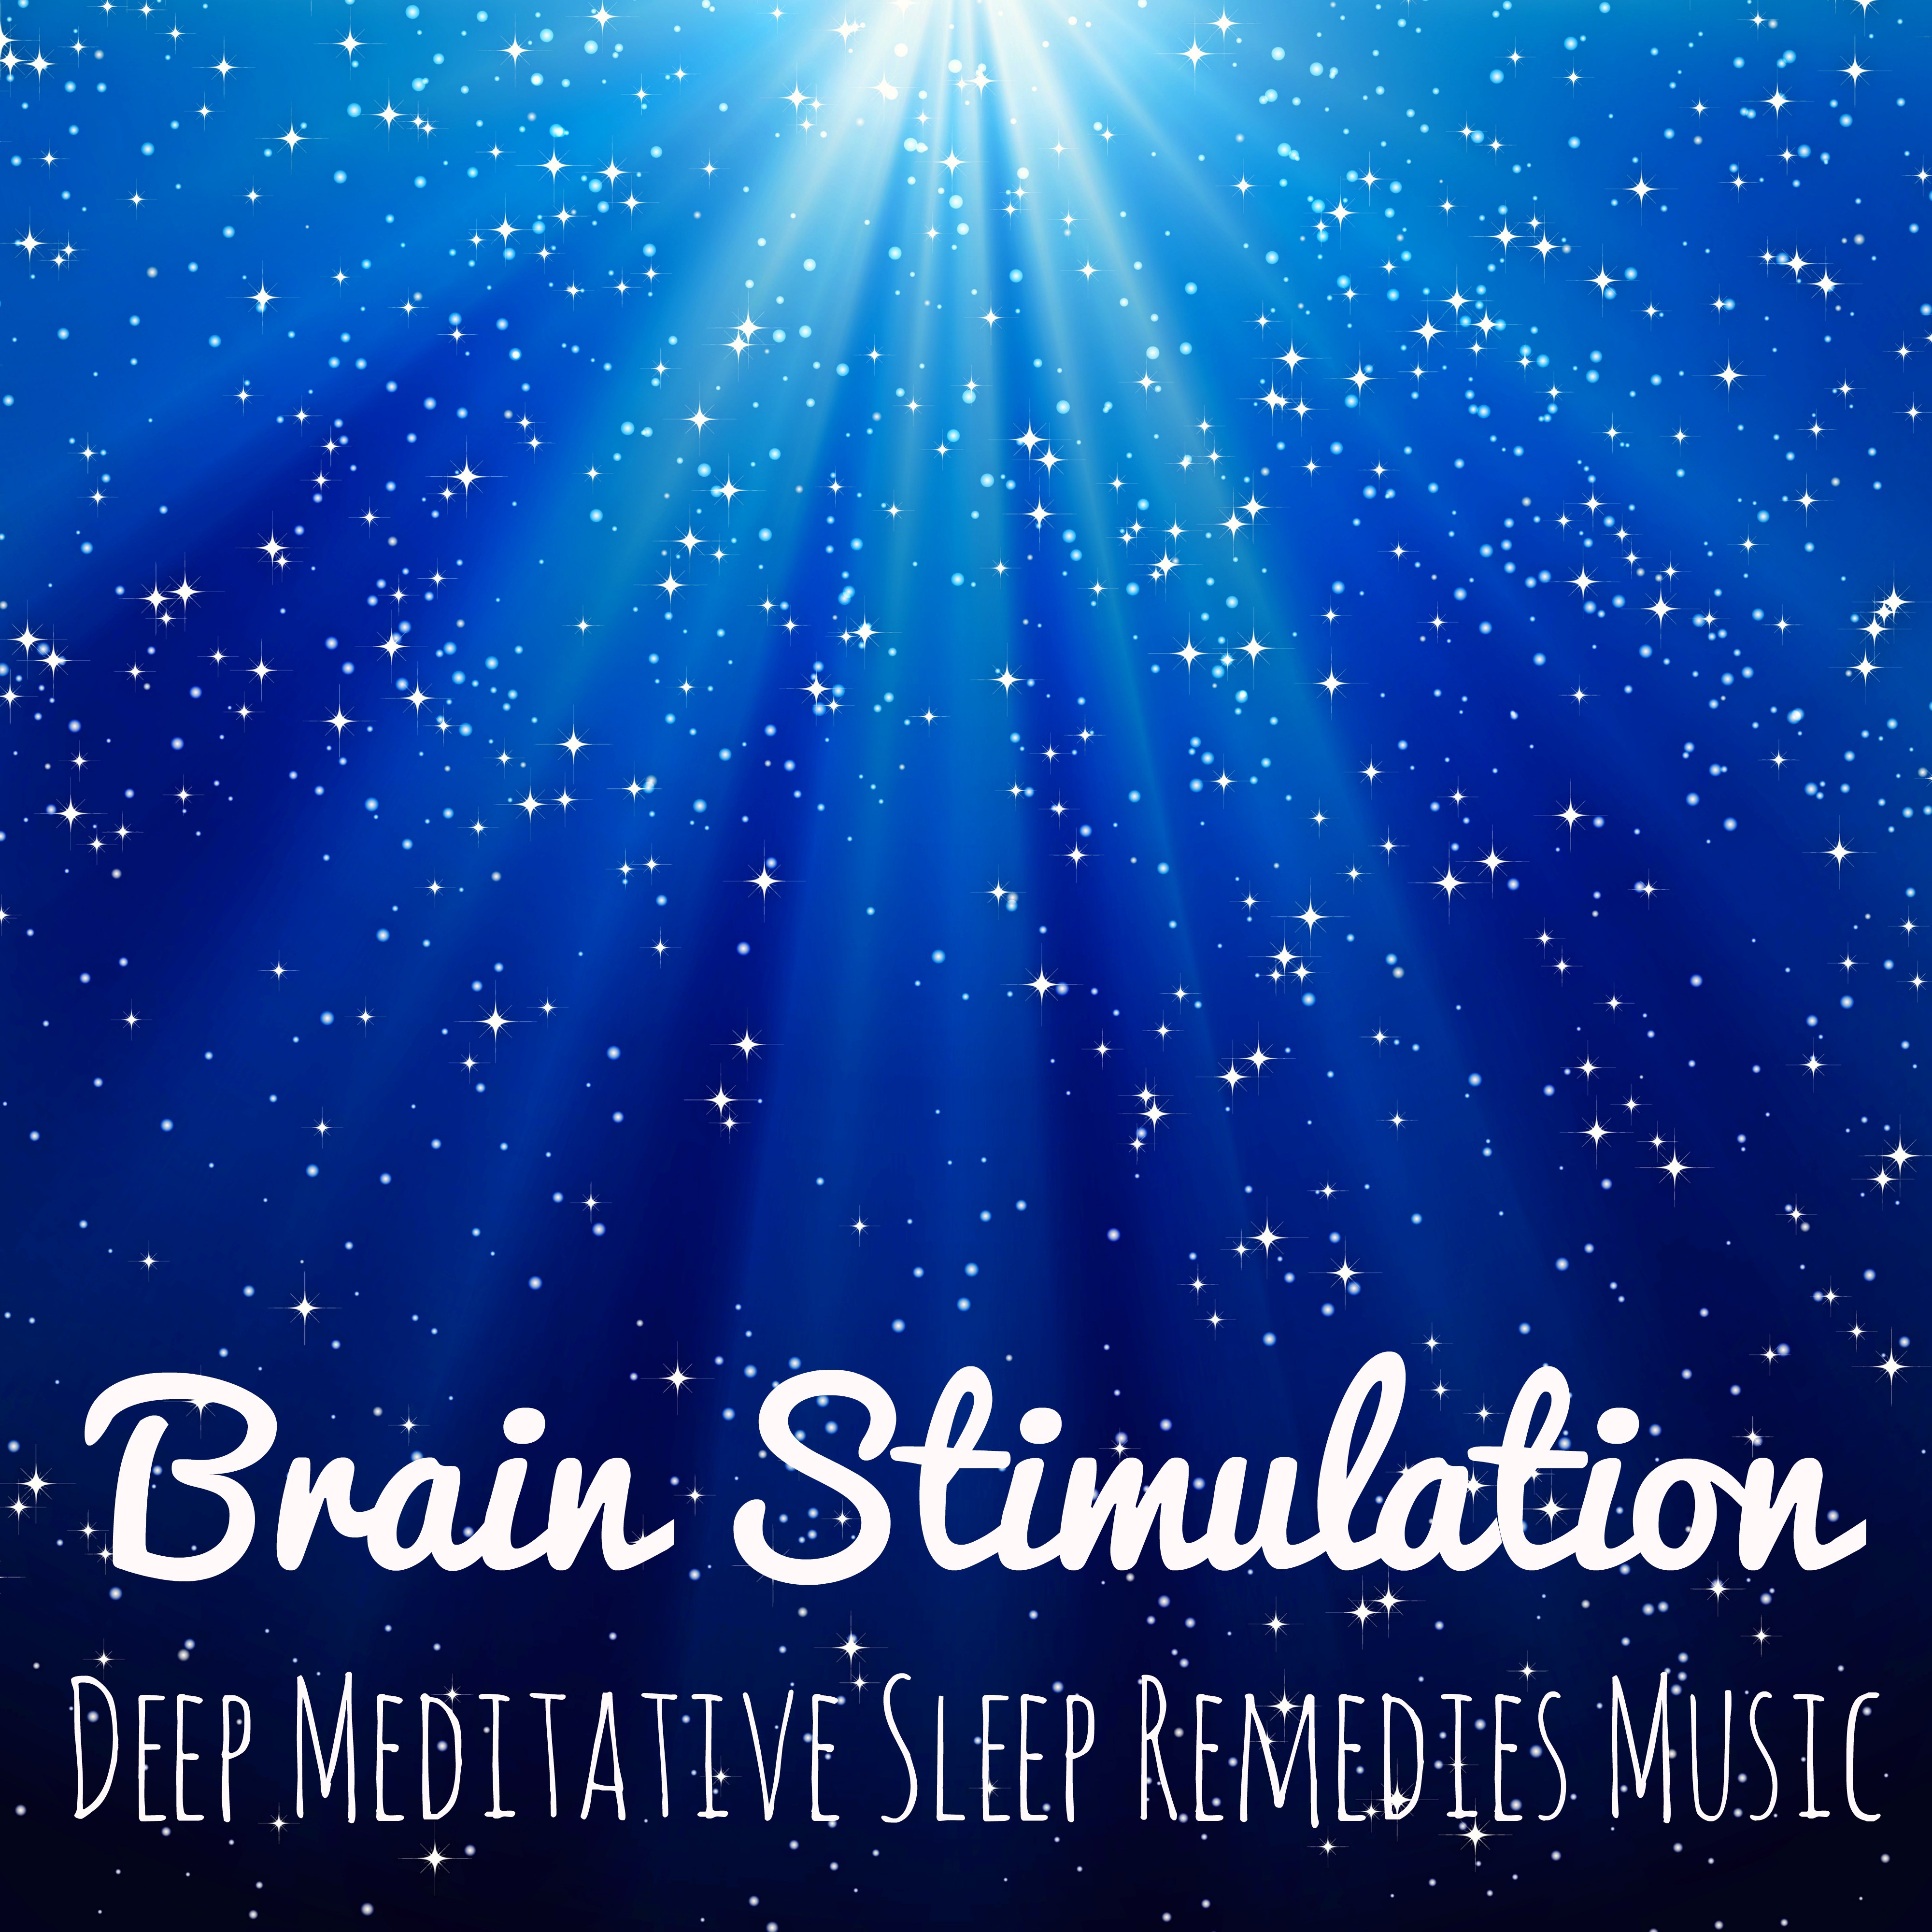 Guided Meditation Sleep